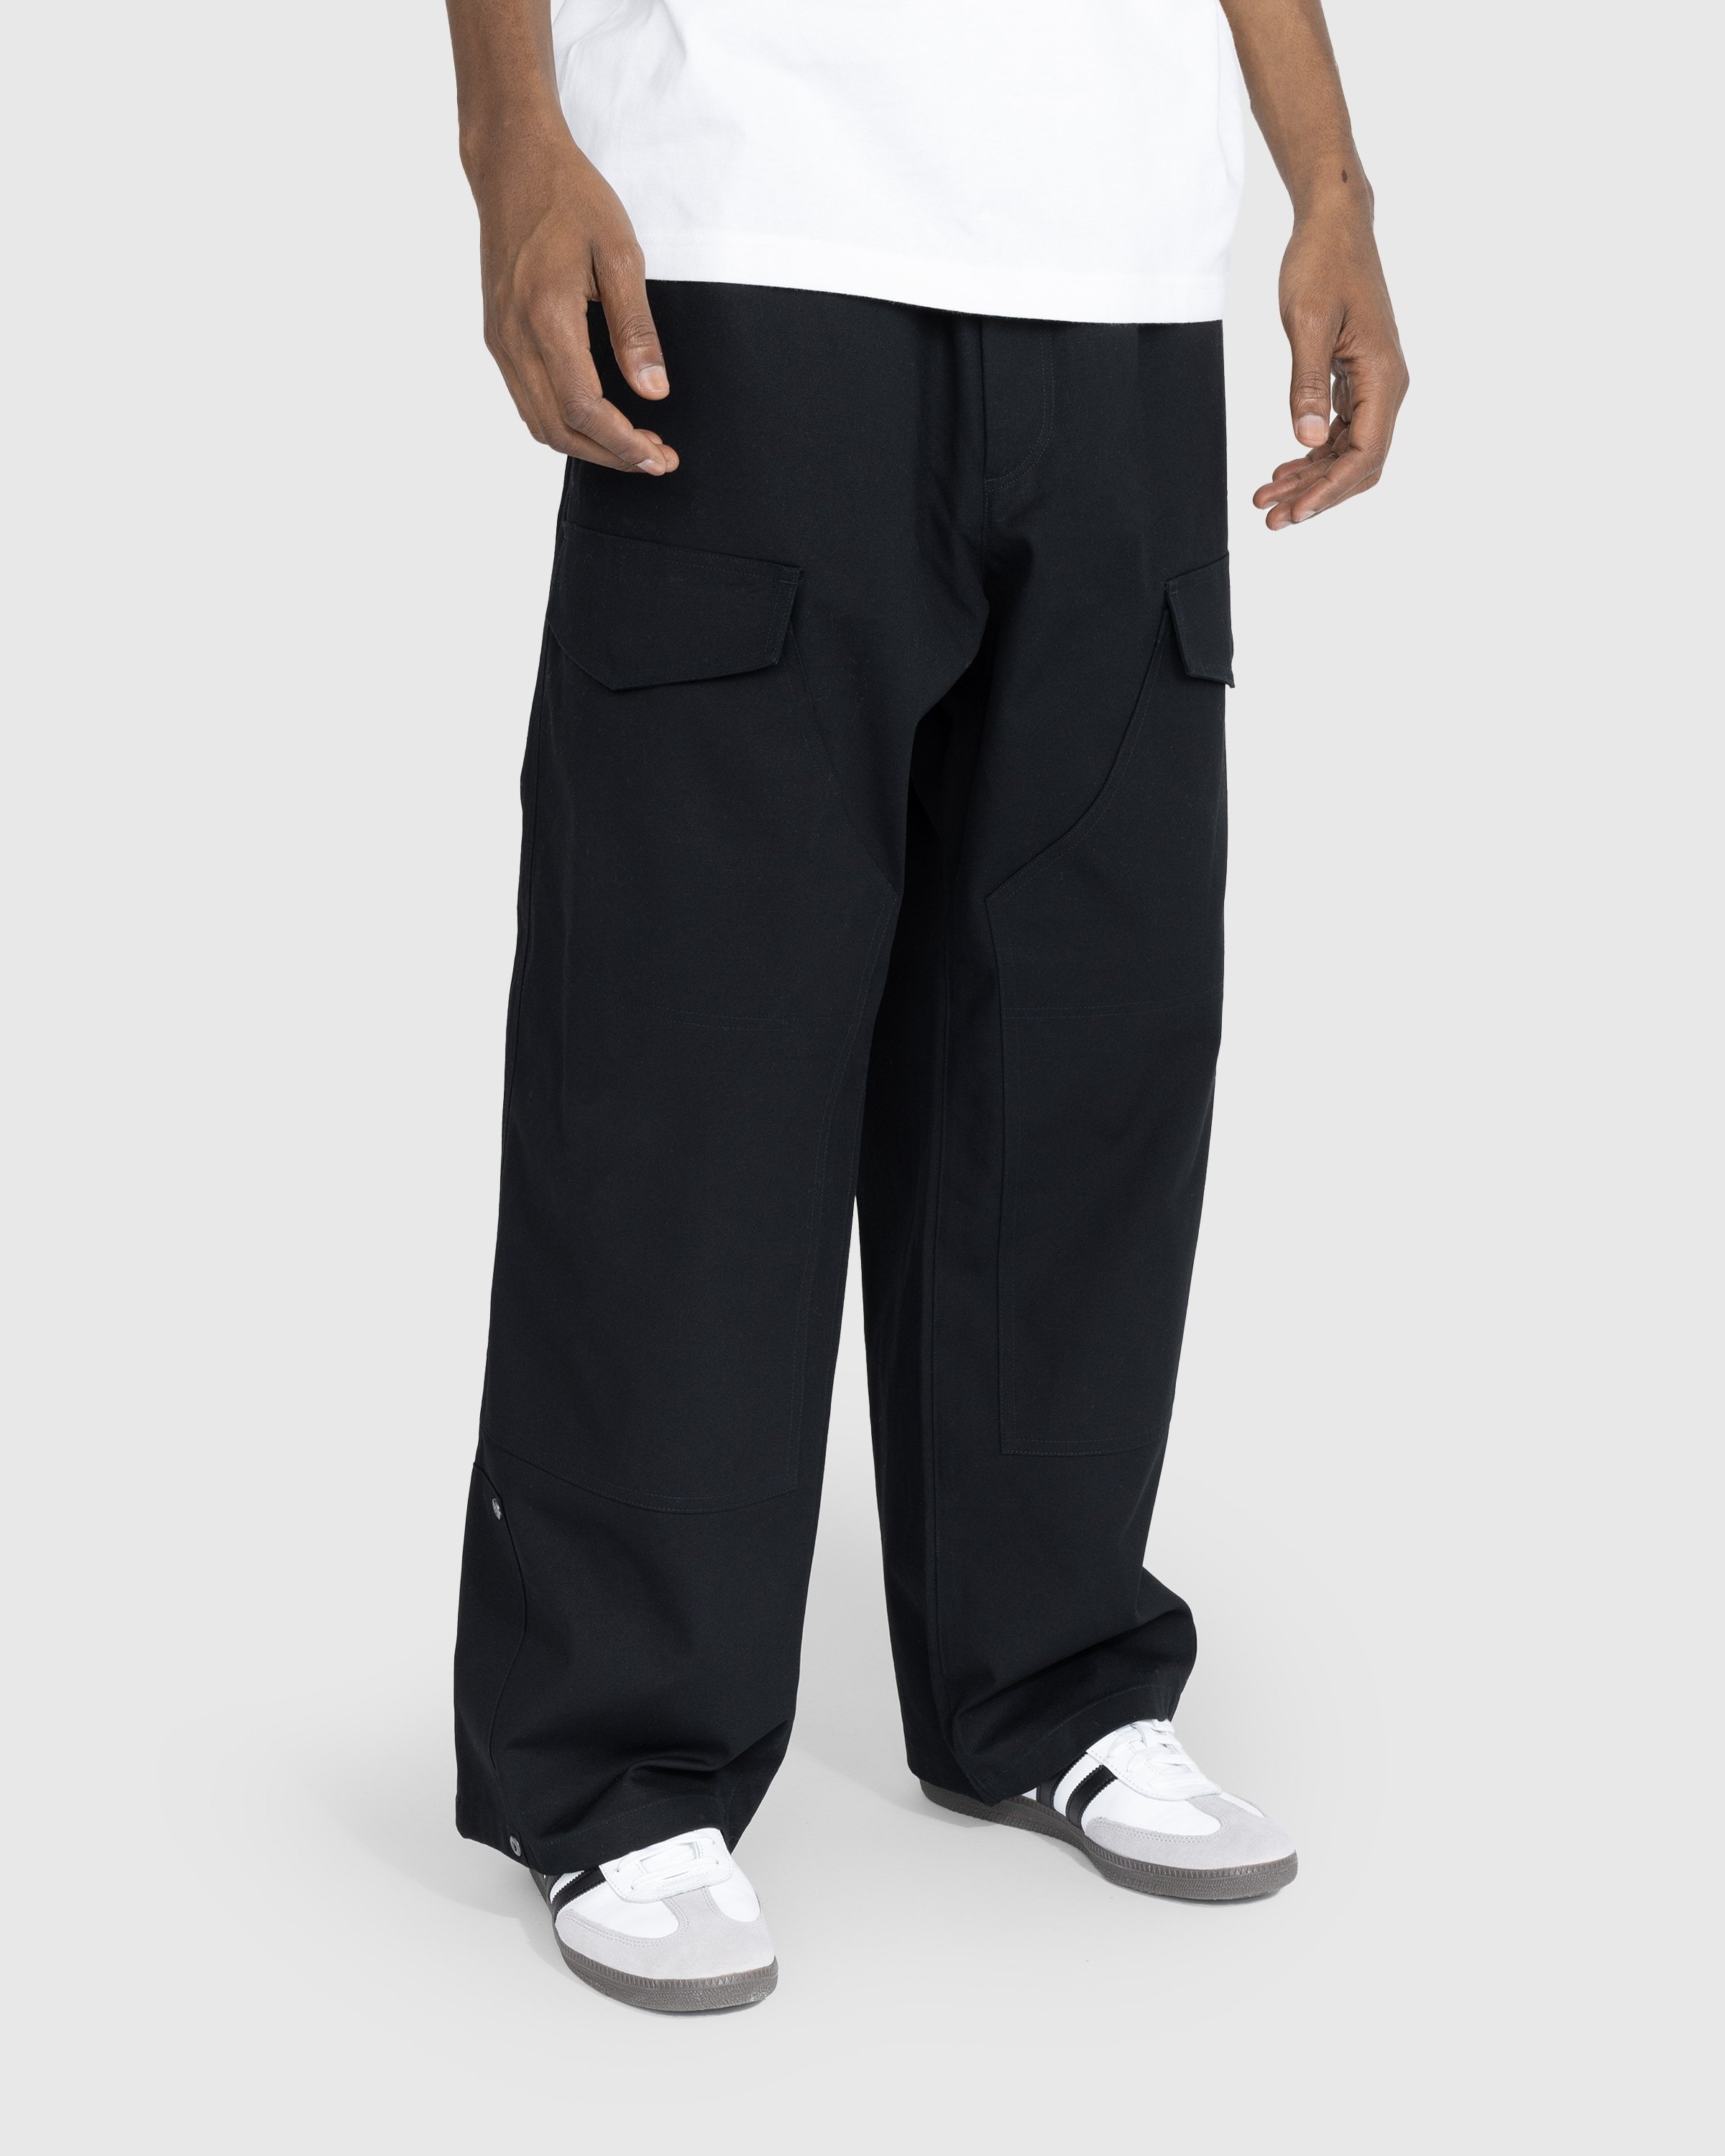 Y-3 – GFX Workwear Pants Black - Pants - Black - Image 2